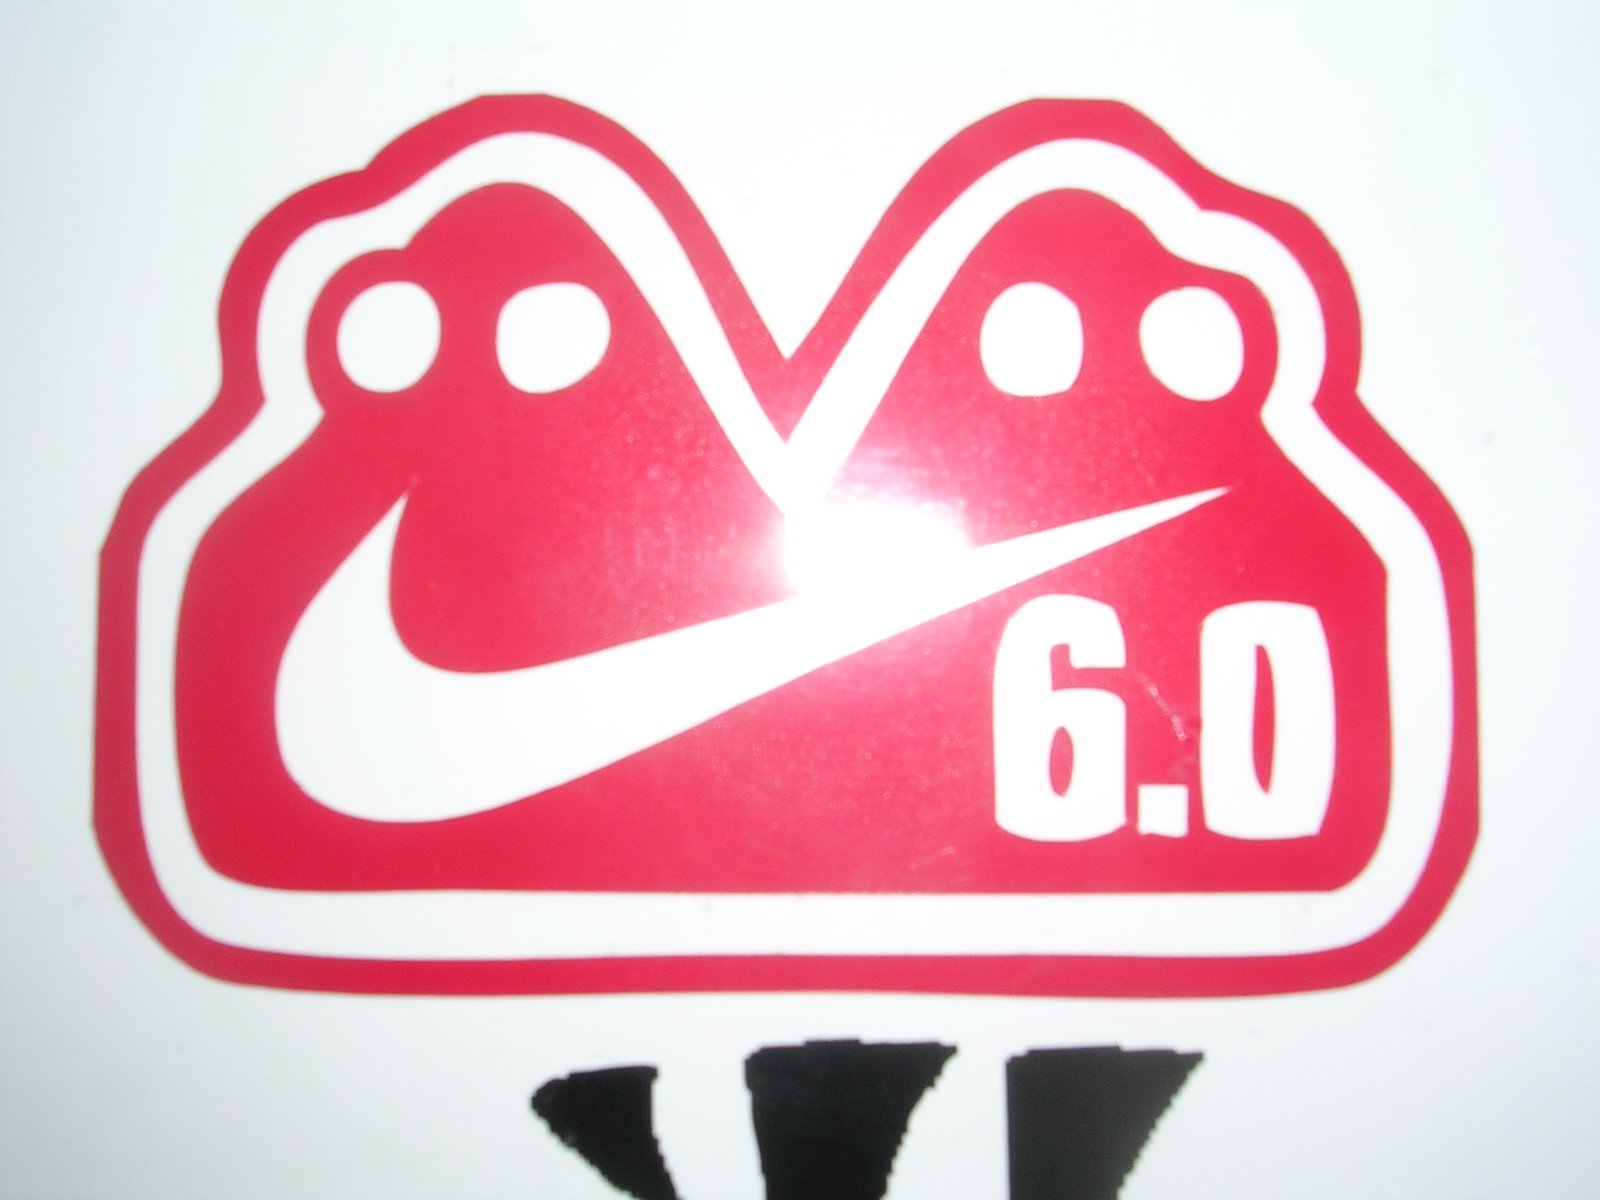 Nike 6.0 sticker i have already made